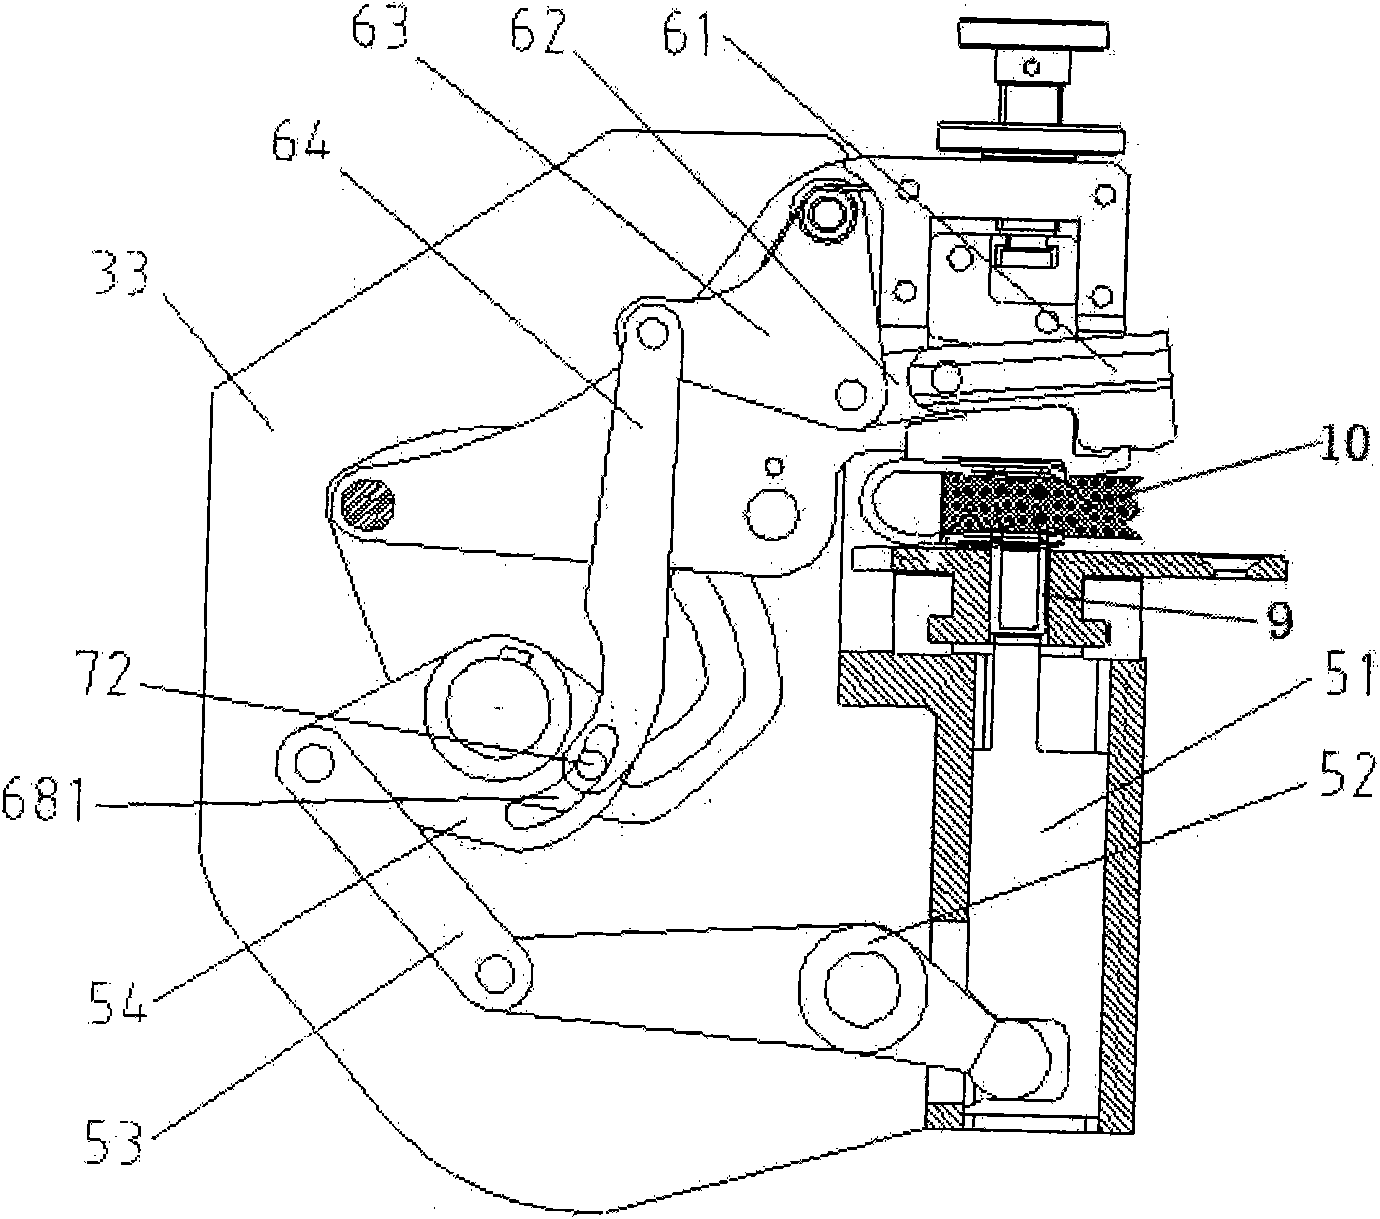 Mechanical button sewing machine